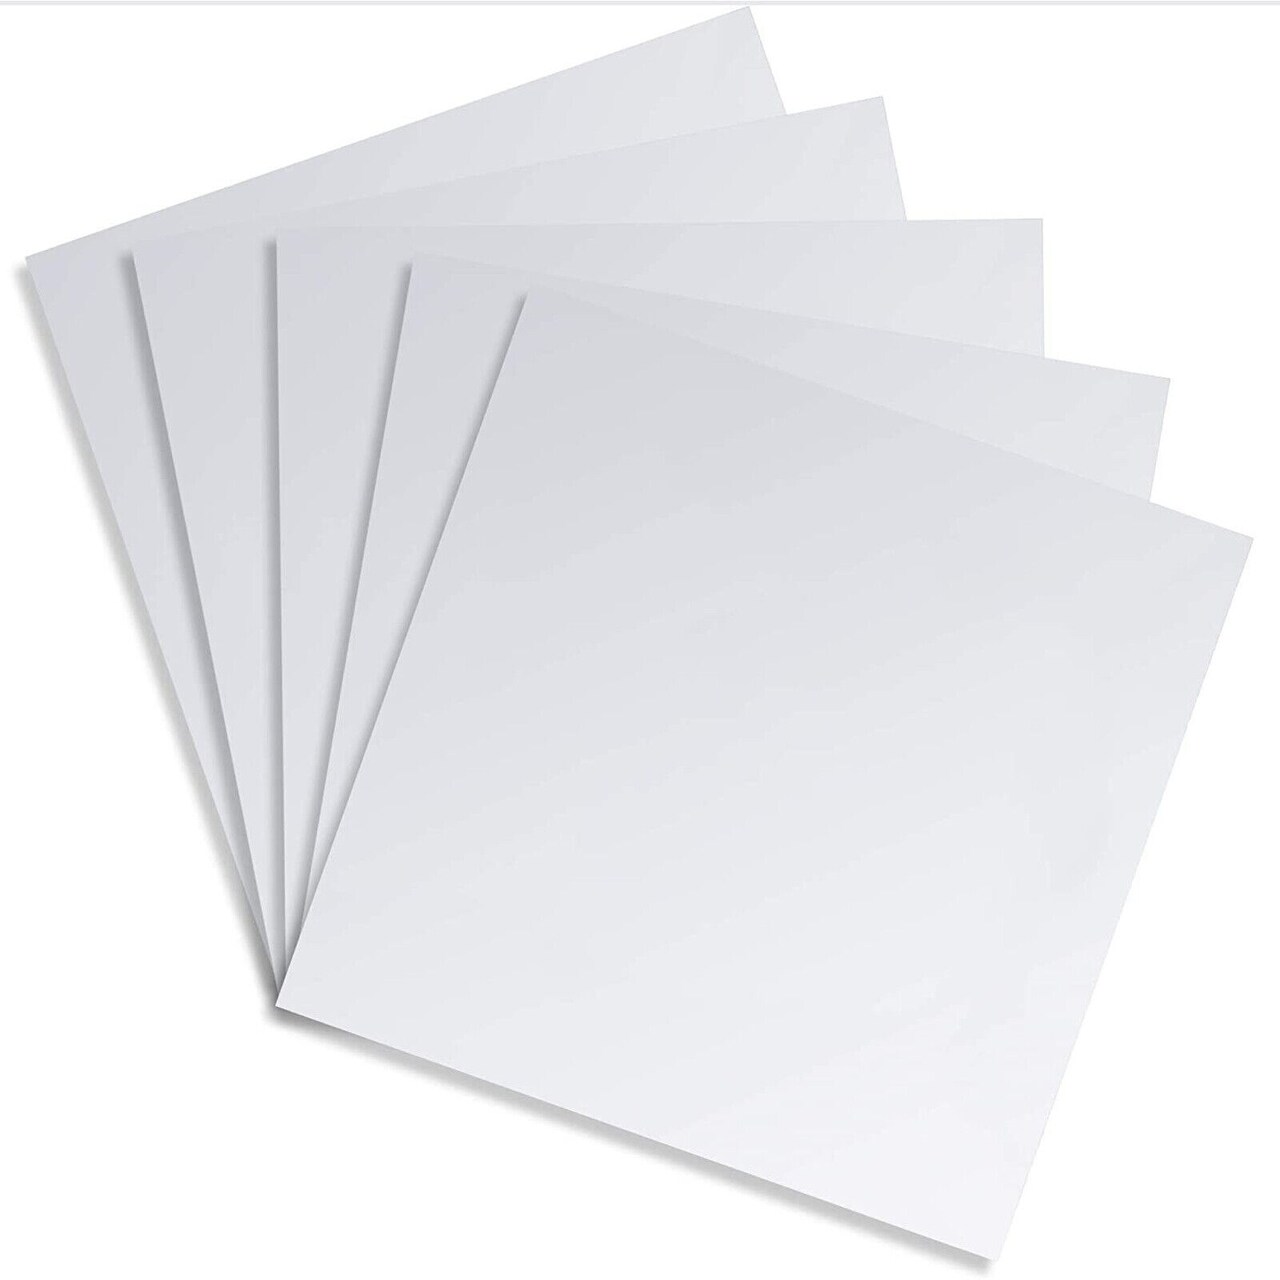 Adhesive Flexible Mirror Plastic Sheet Acrylic Tiles for Wall Decor